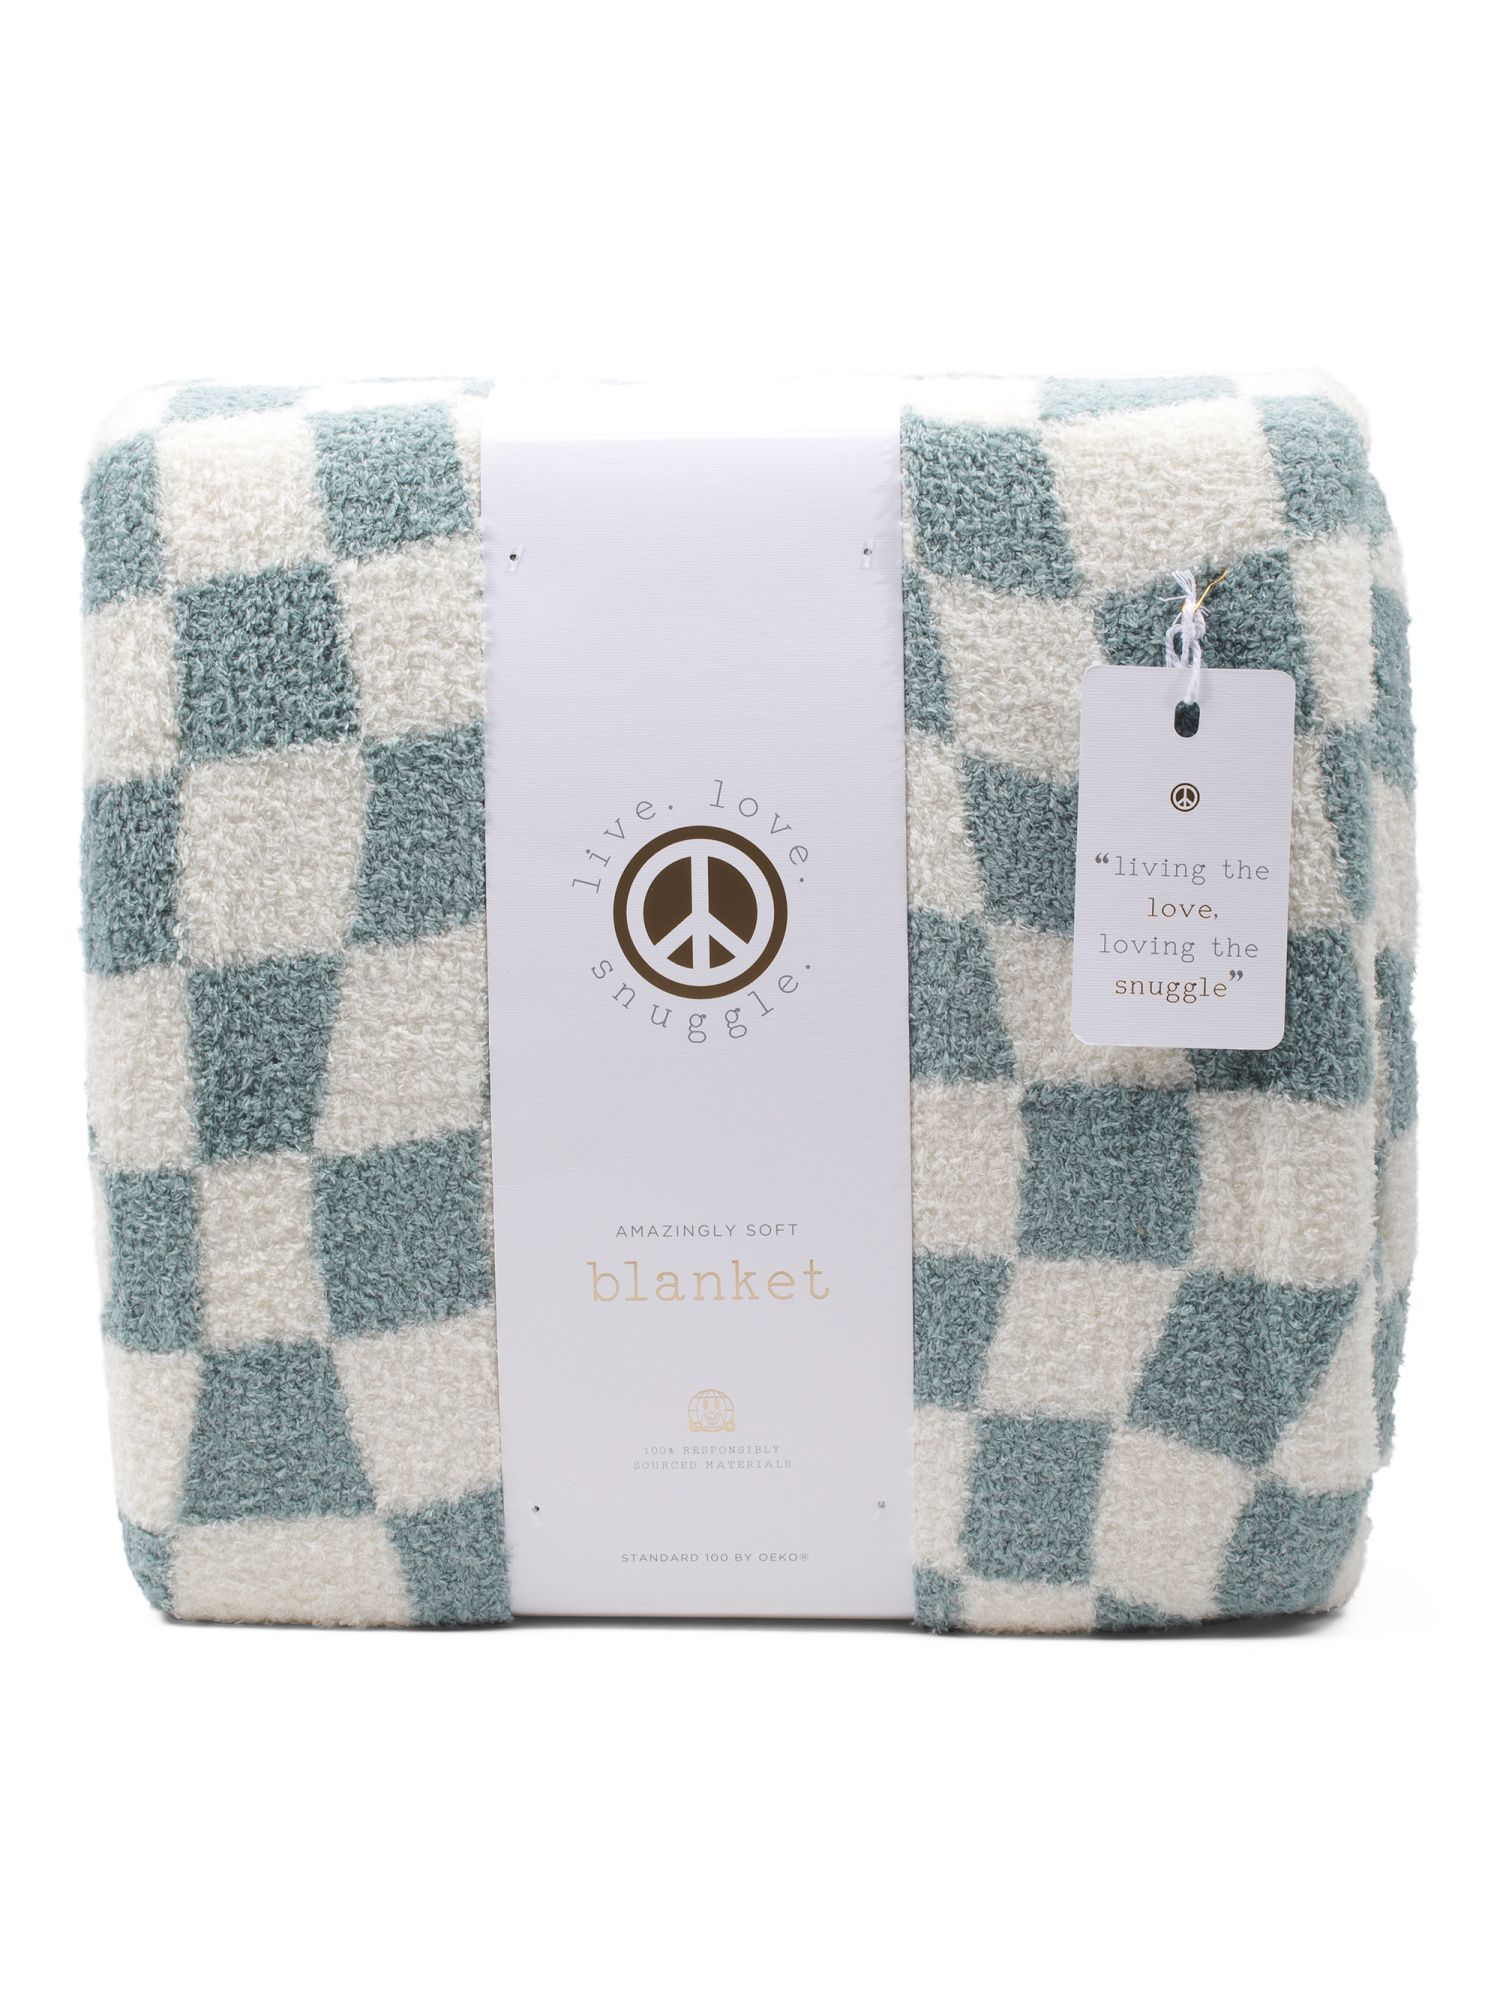 Twirl Checkerboard Feather Knit Blanket | Bed & Bath | Marshalls | Marshalls